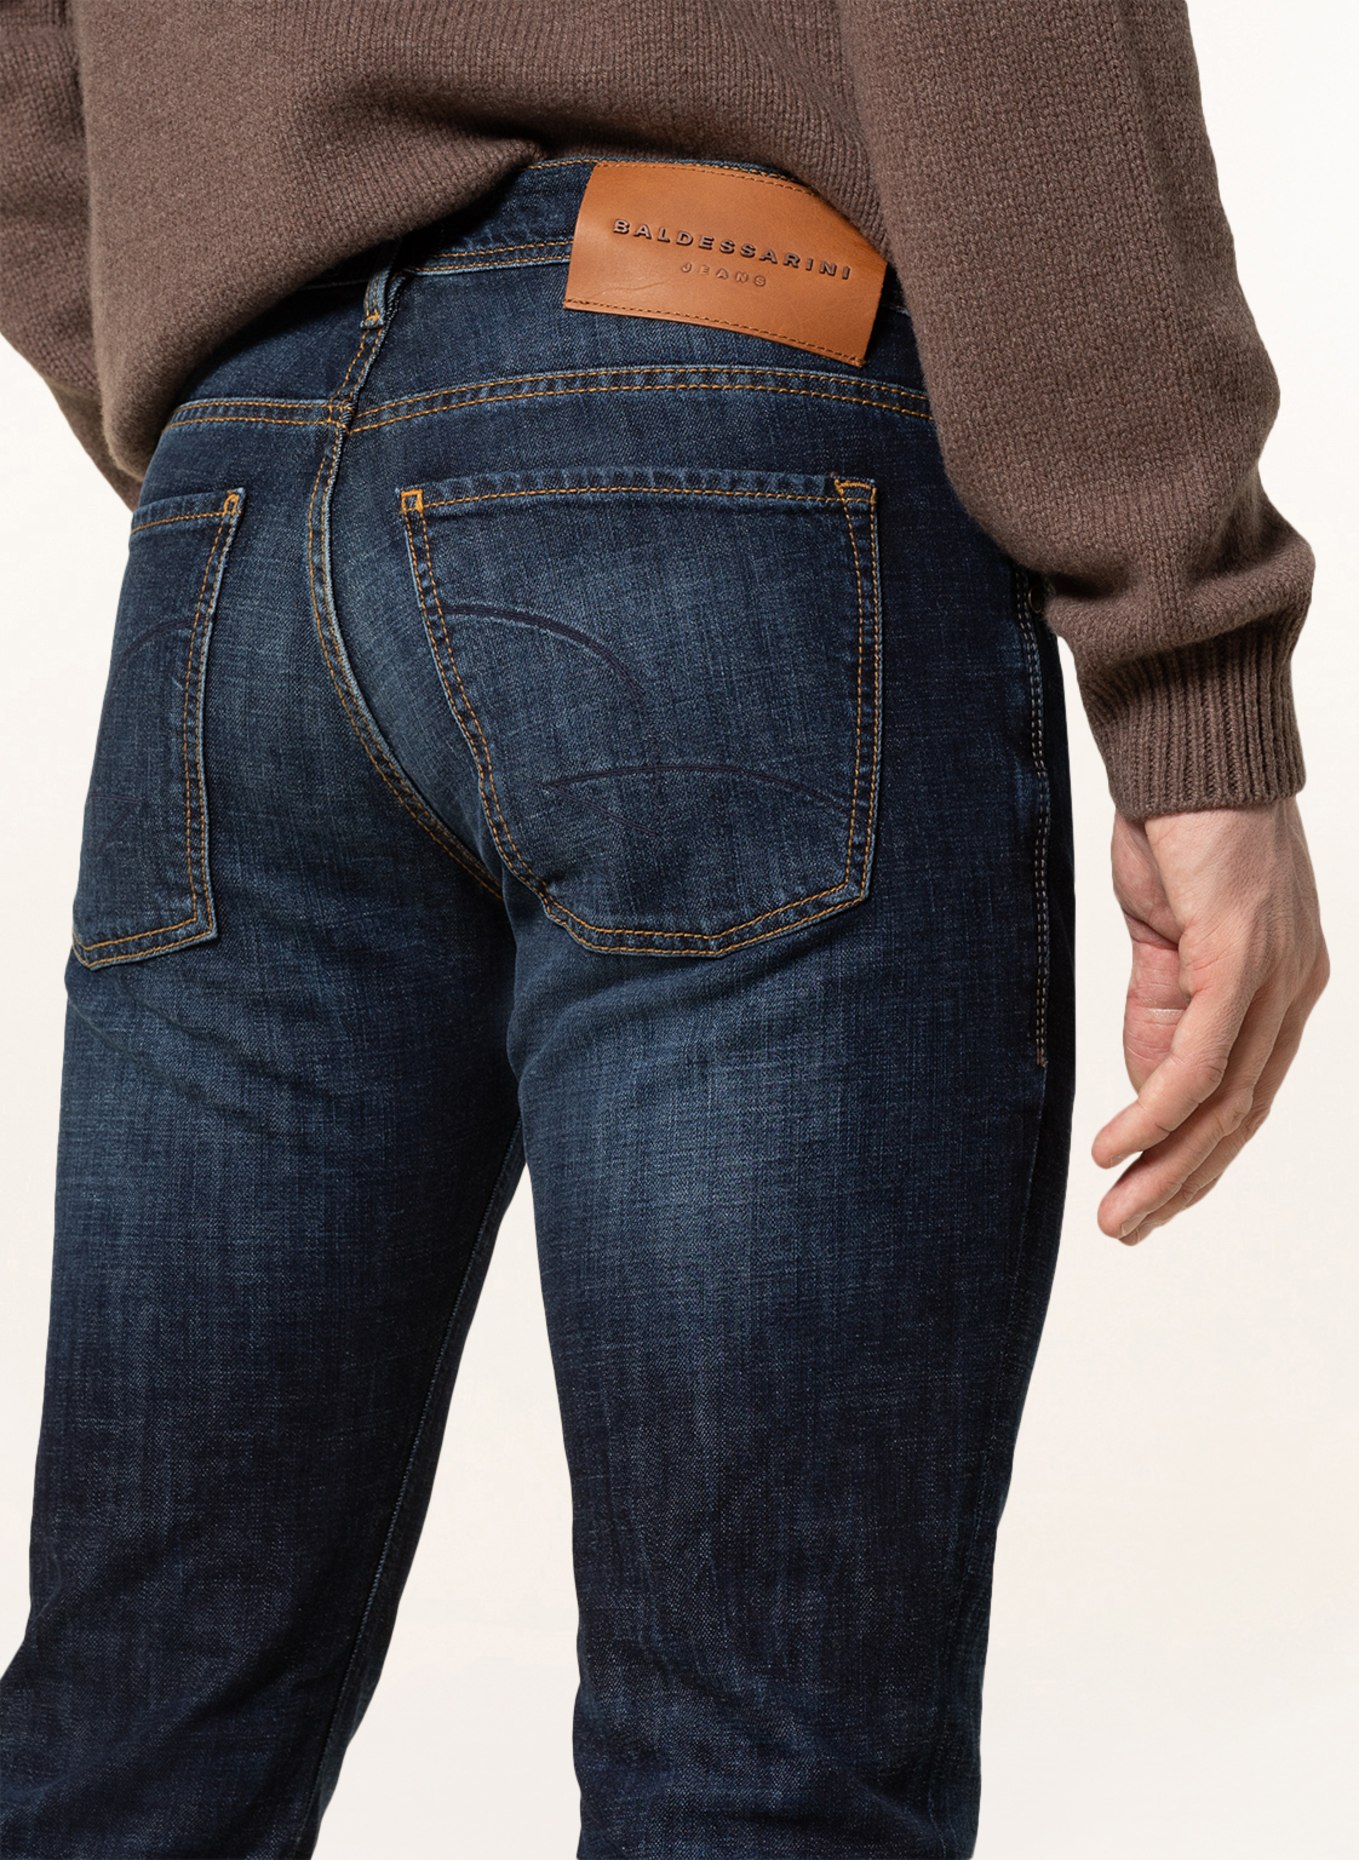 BALDESSARINI Jeans Regular Fit , Farbe: 6816 dark blue used buffies (Bild 5)